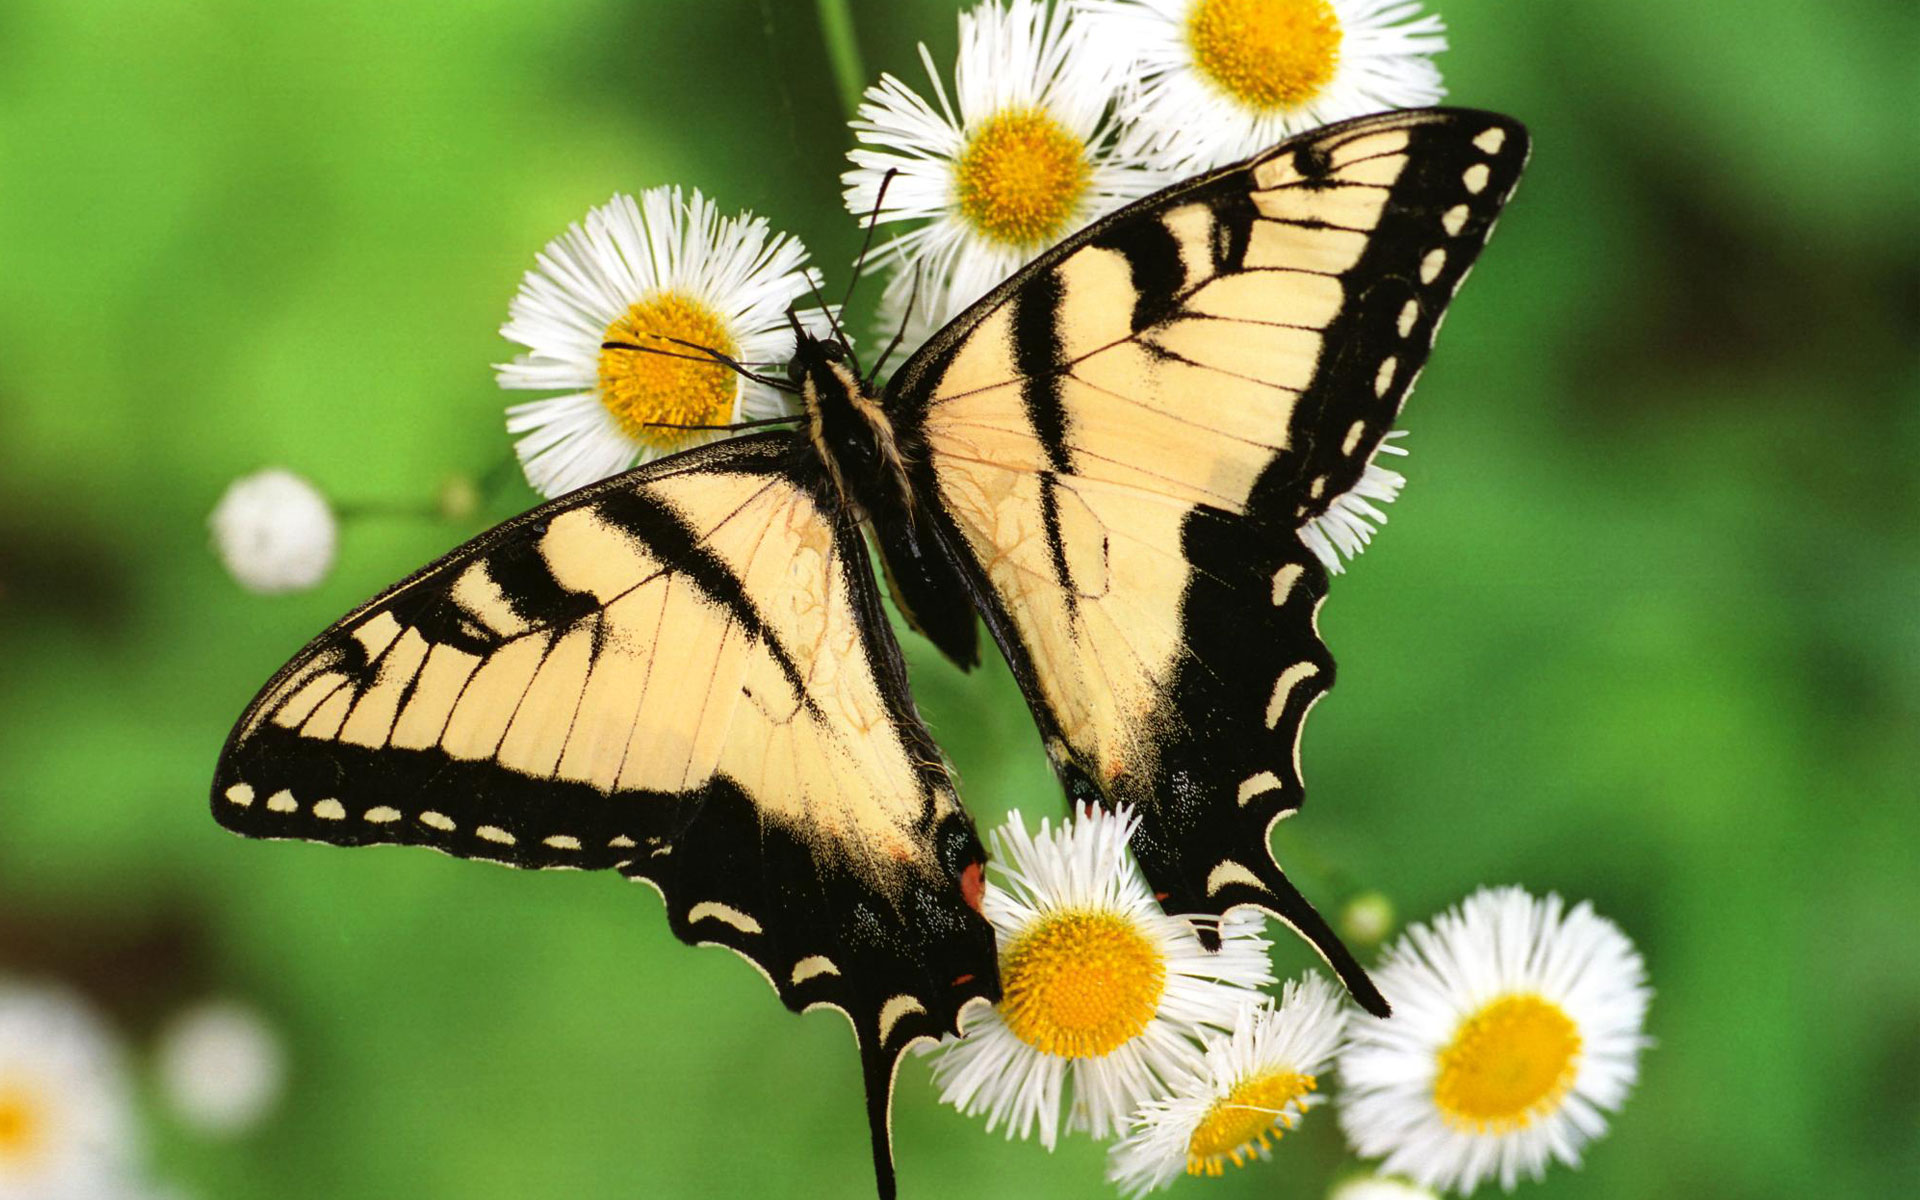 Tiger Swallowtail Butterfly - Wallpaper, High Definition, High Quality,  Widescreen